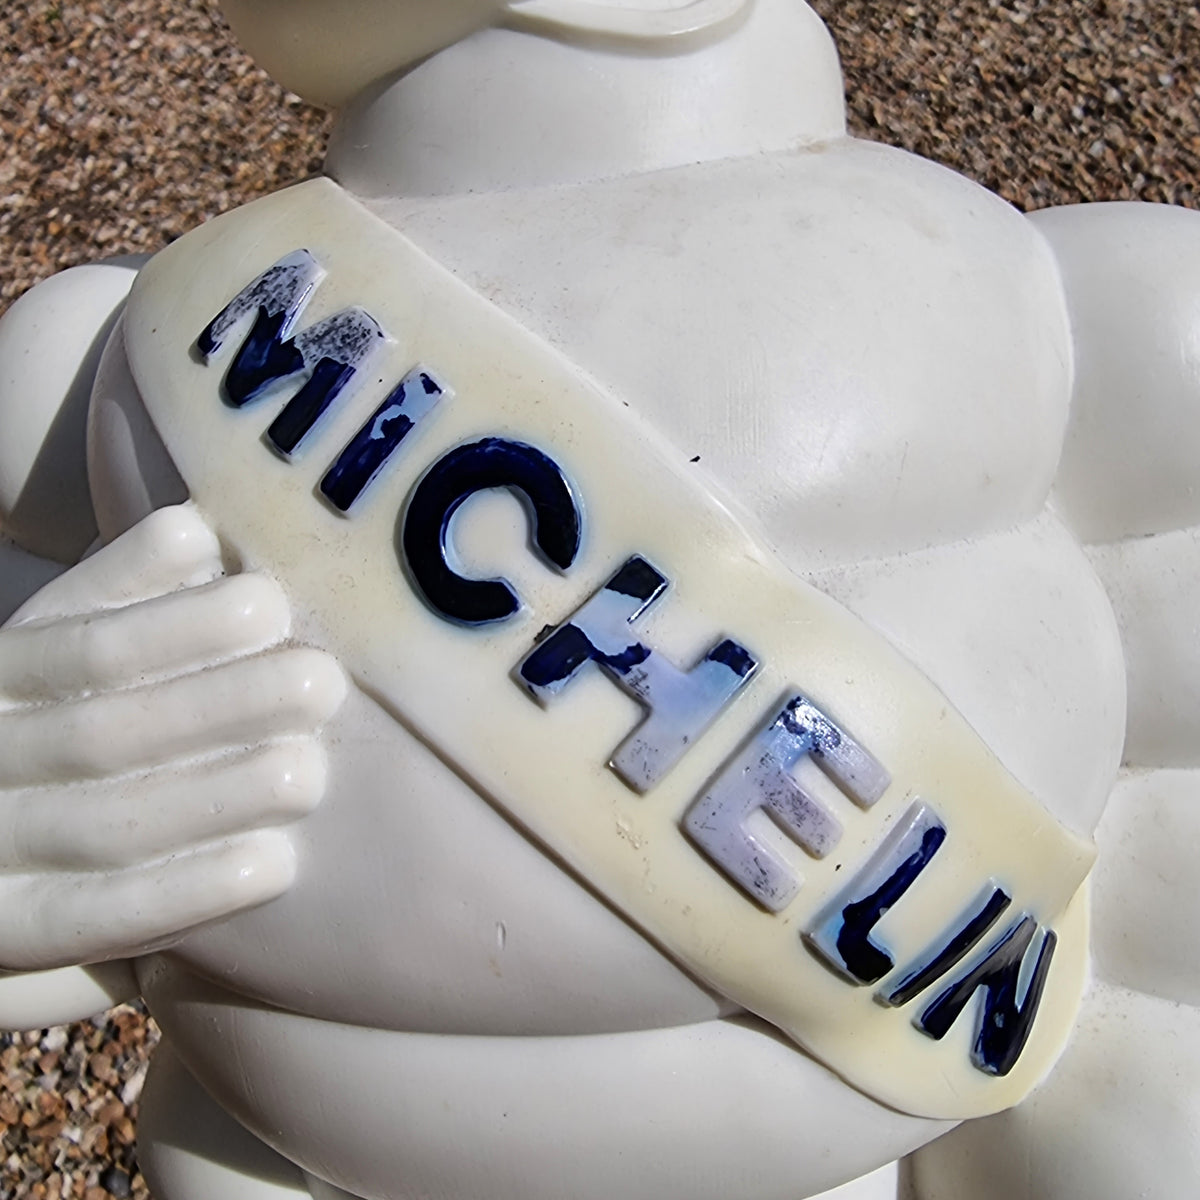 Michelin Man (Bibendum)